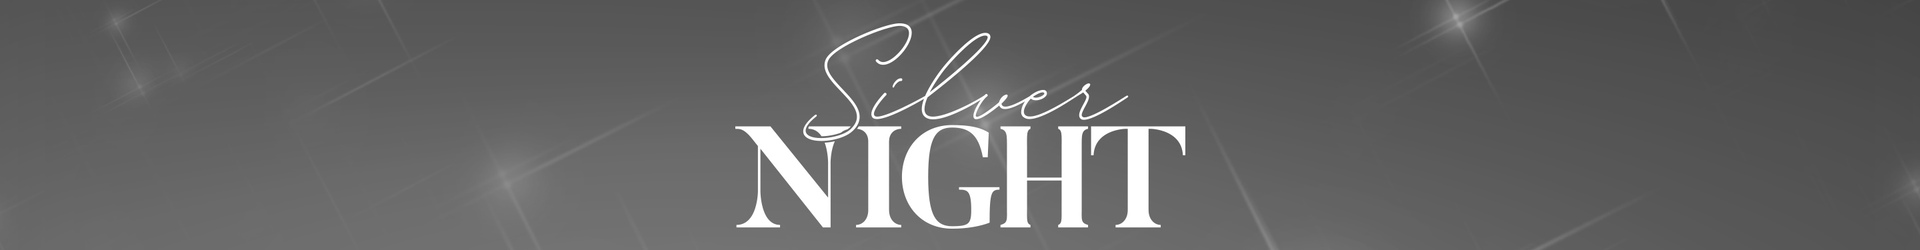 Silver Night Studio F